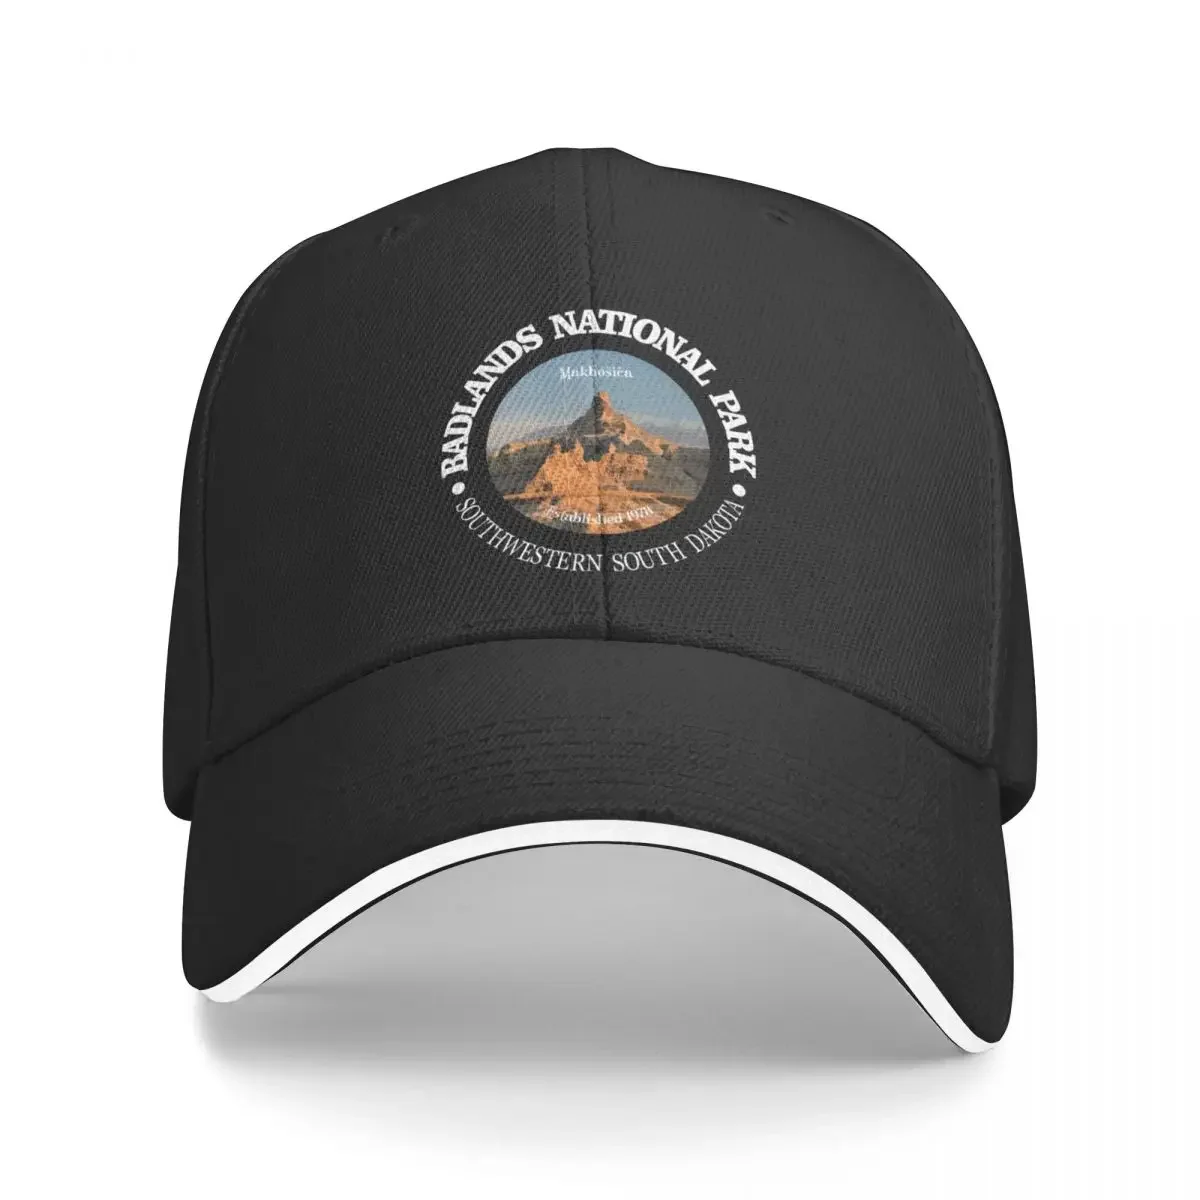 

Badlands National Park (NP) Baseball Cap Golf Hat black |-F-| Luxury Cap Golf Wear Men Women's